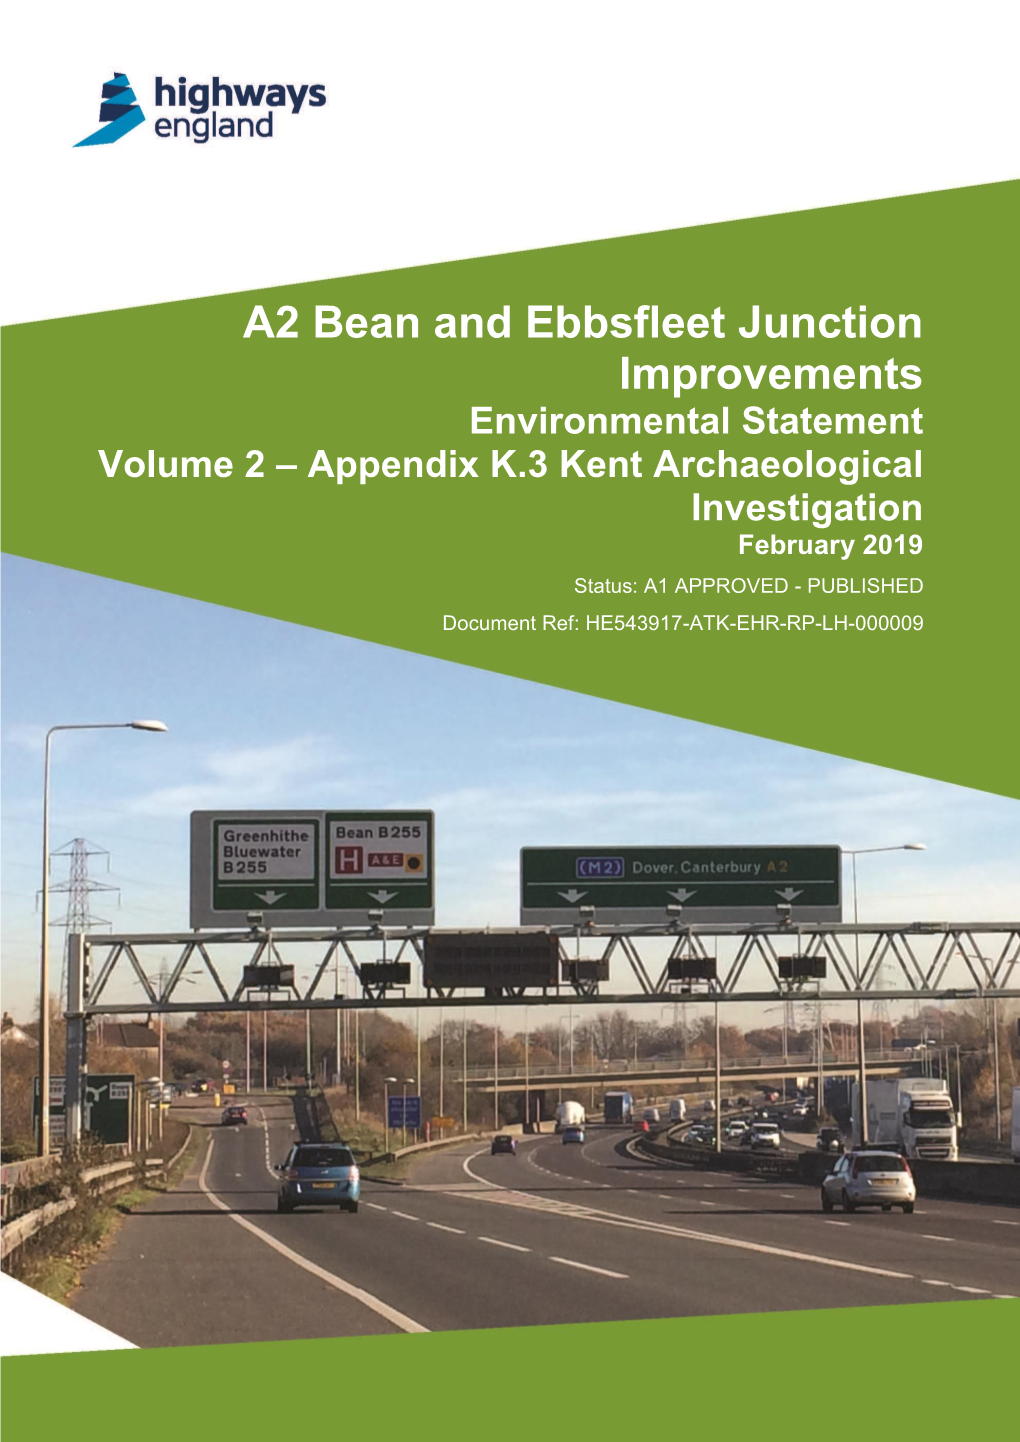 A2 Bean and Ebbsfleet Junction Improvements